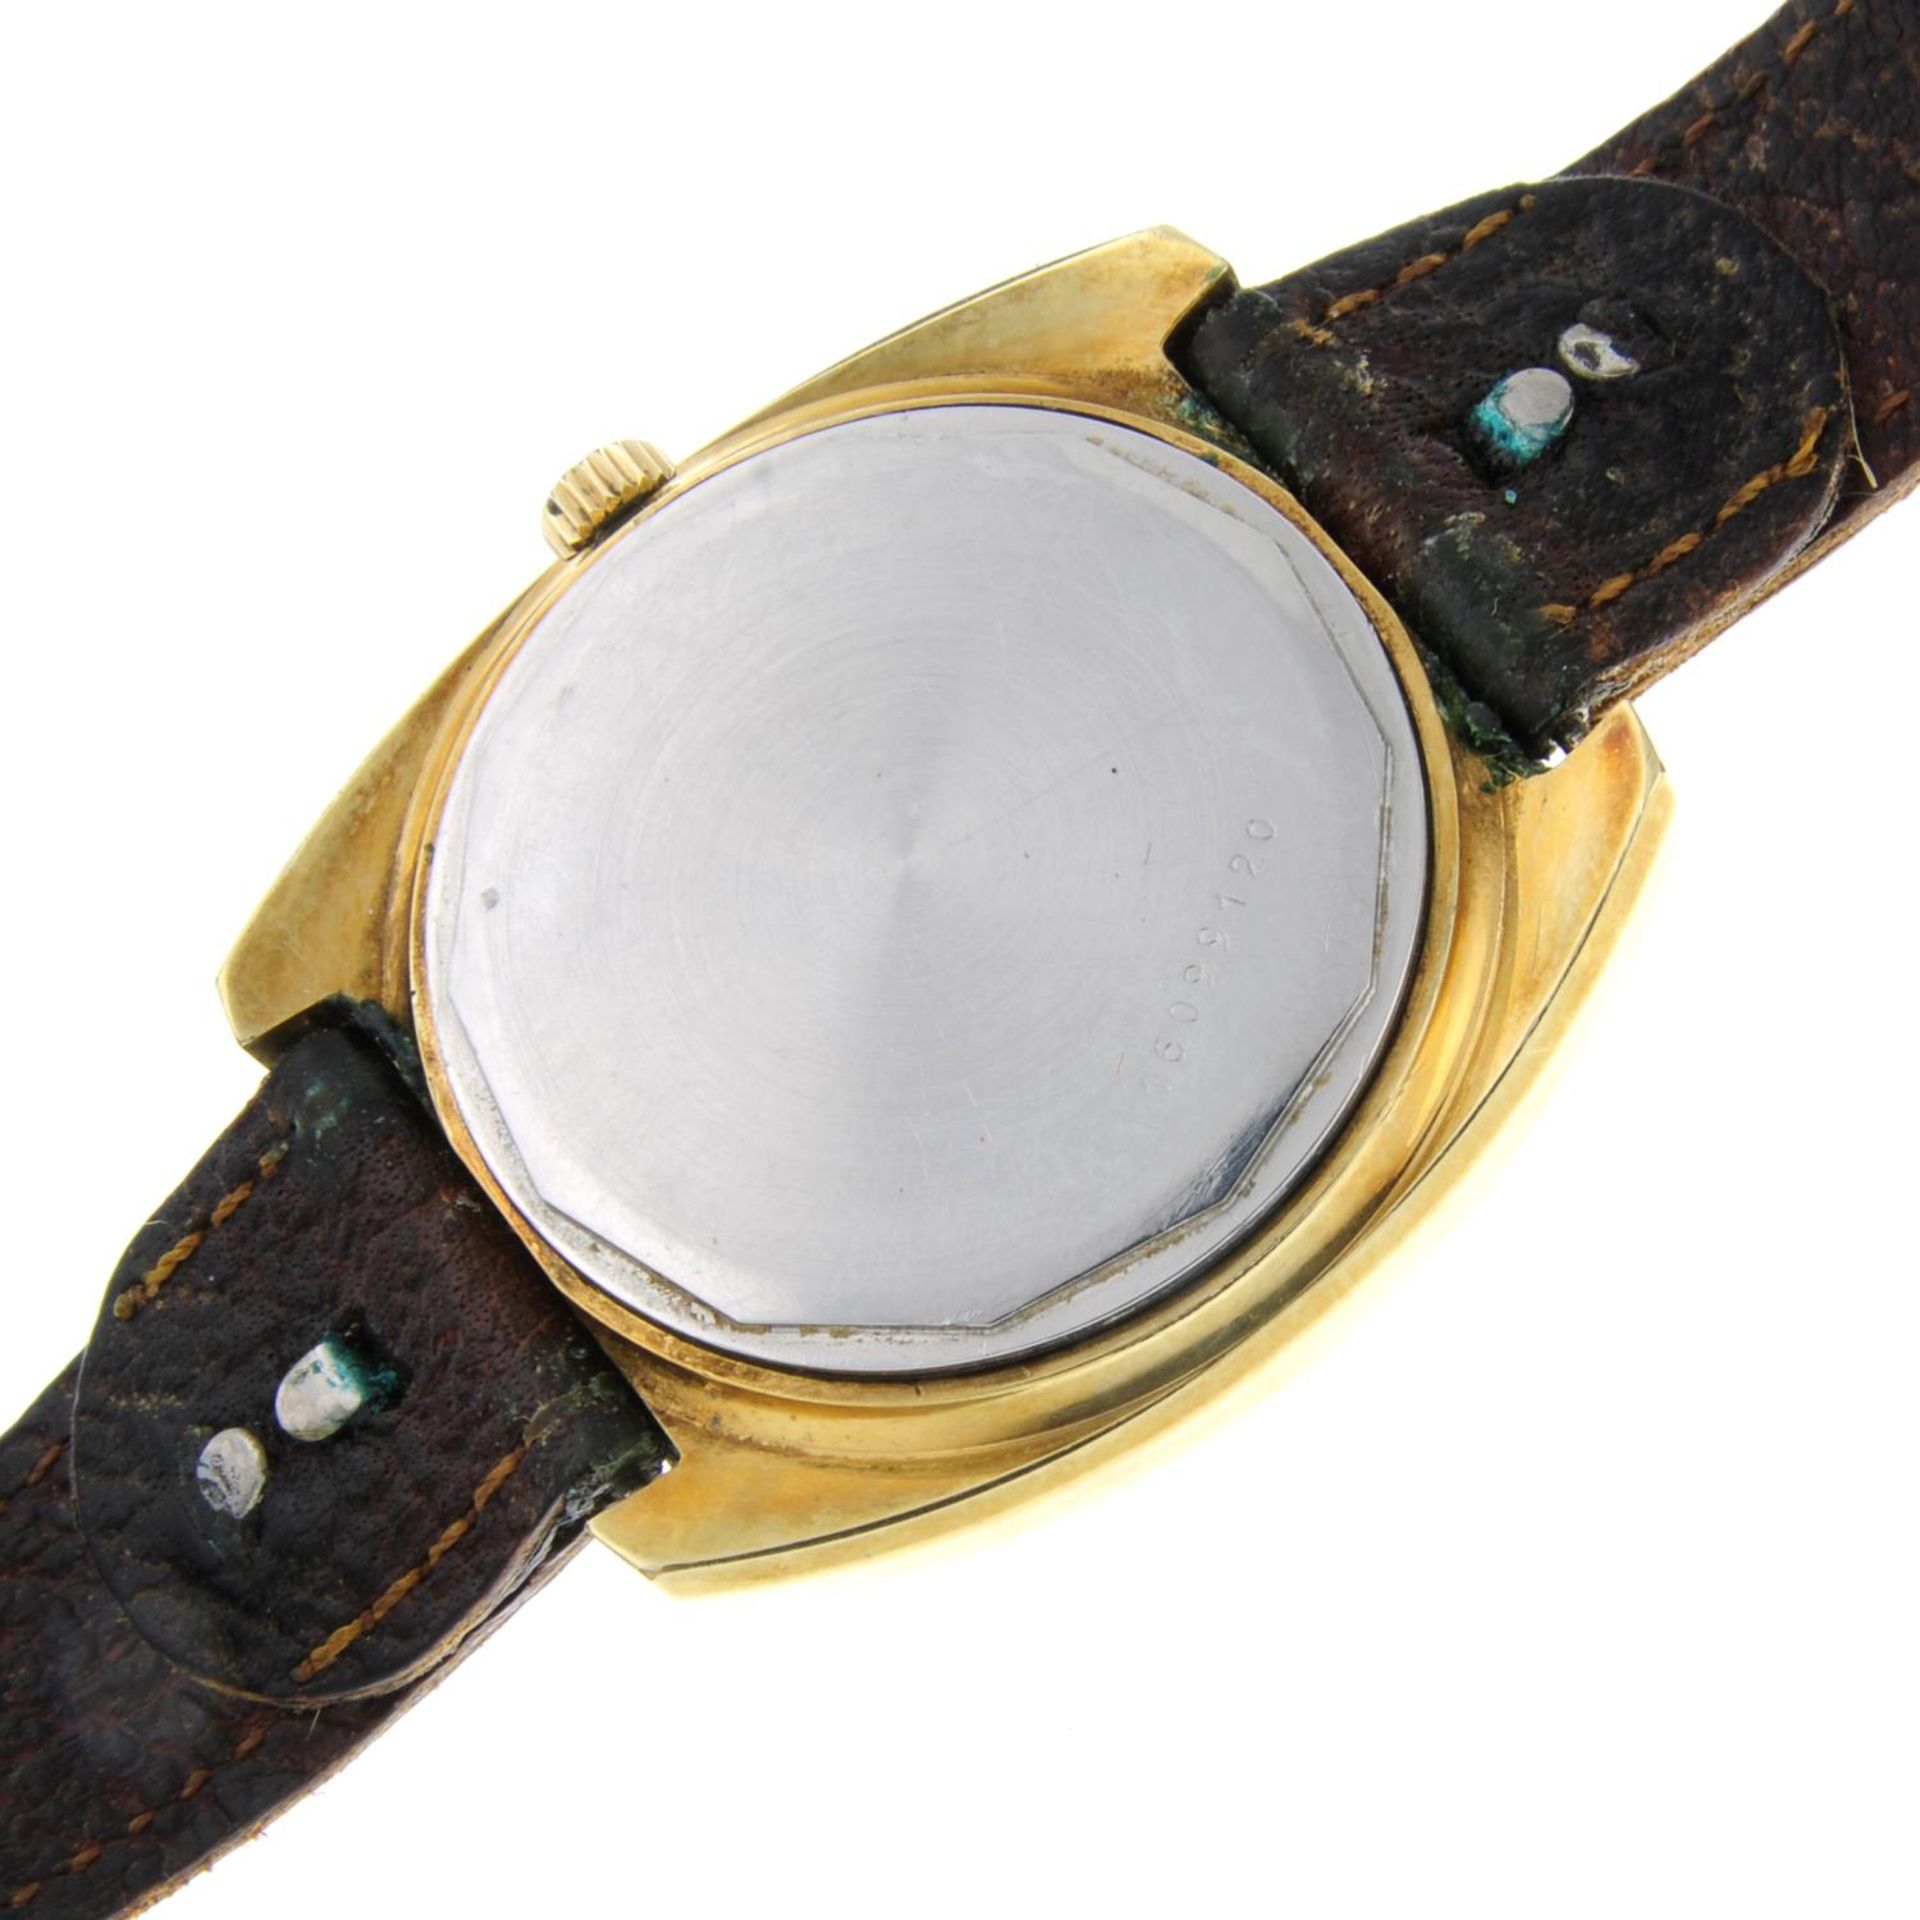 LONGINES - a gentleman's Ultronic wrist watch. - Image 4 of 4